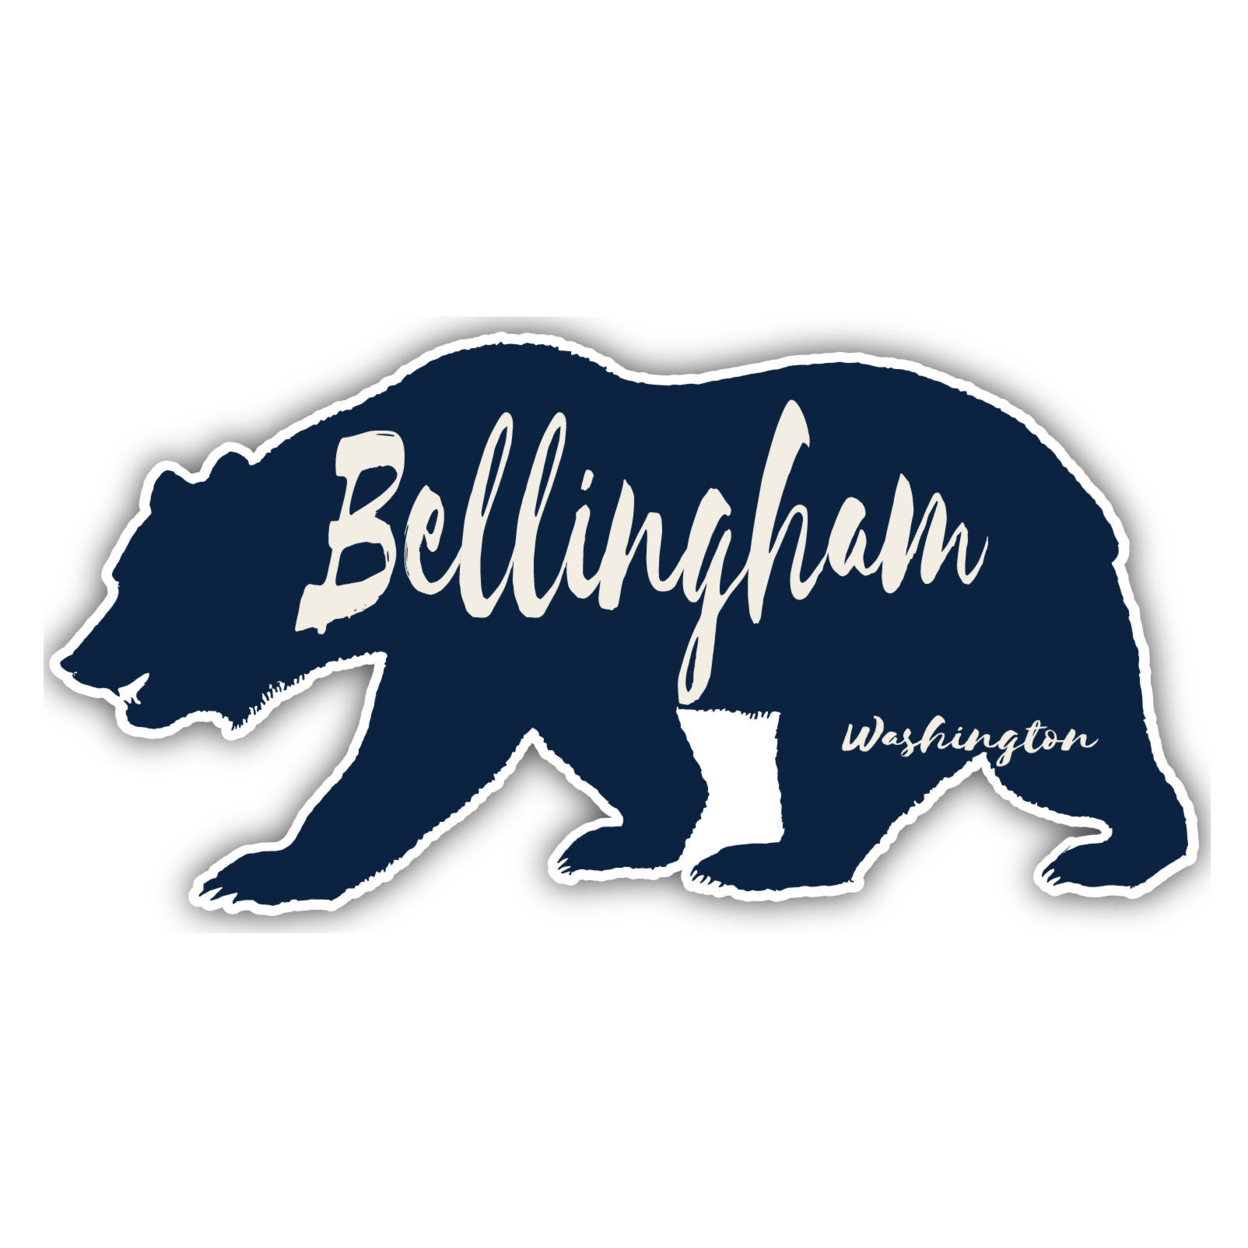 Bellingham Washington Souvenir Decorative Stickers (Choose Theme And Size) - Single Unit, 12-Inch, Bear